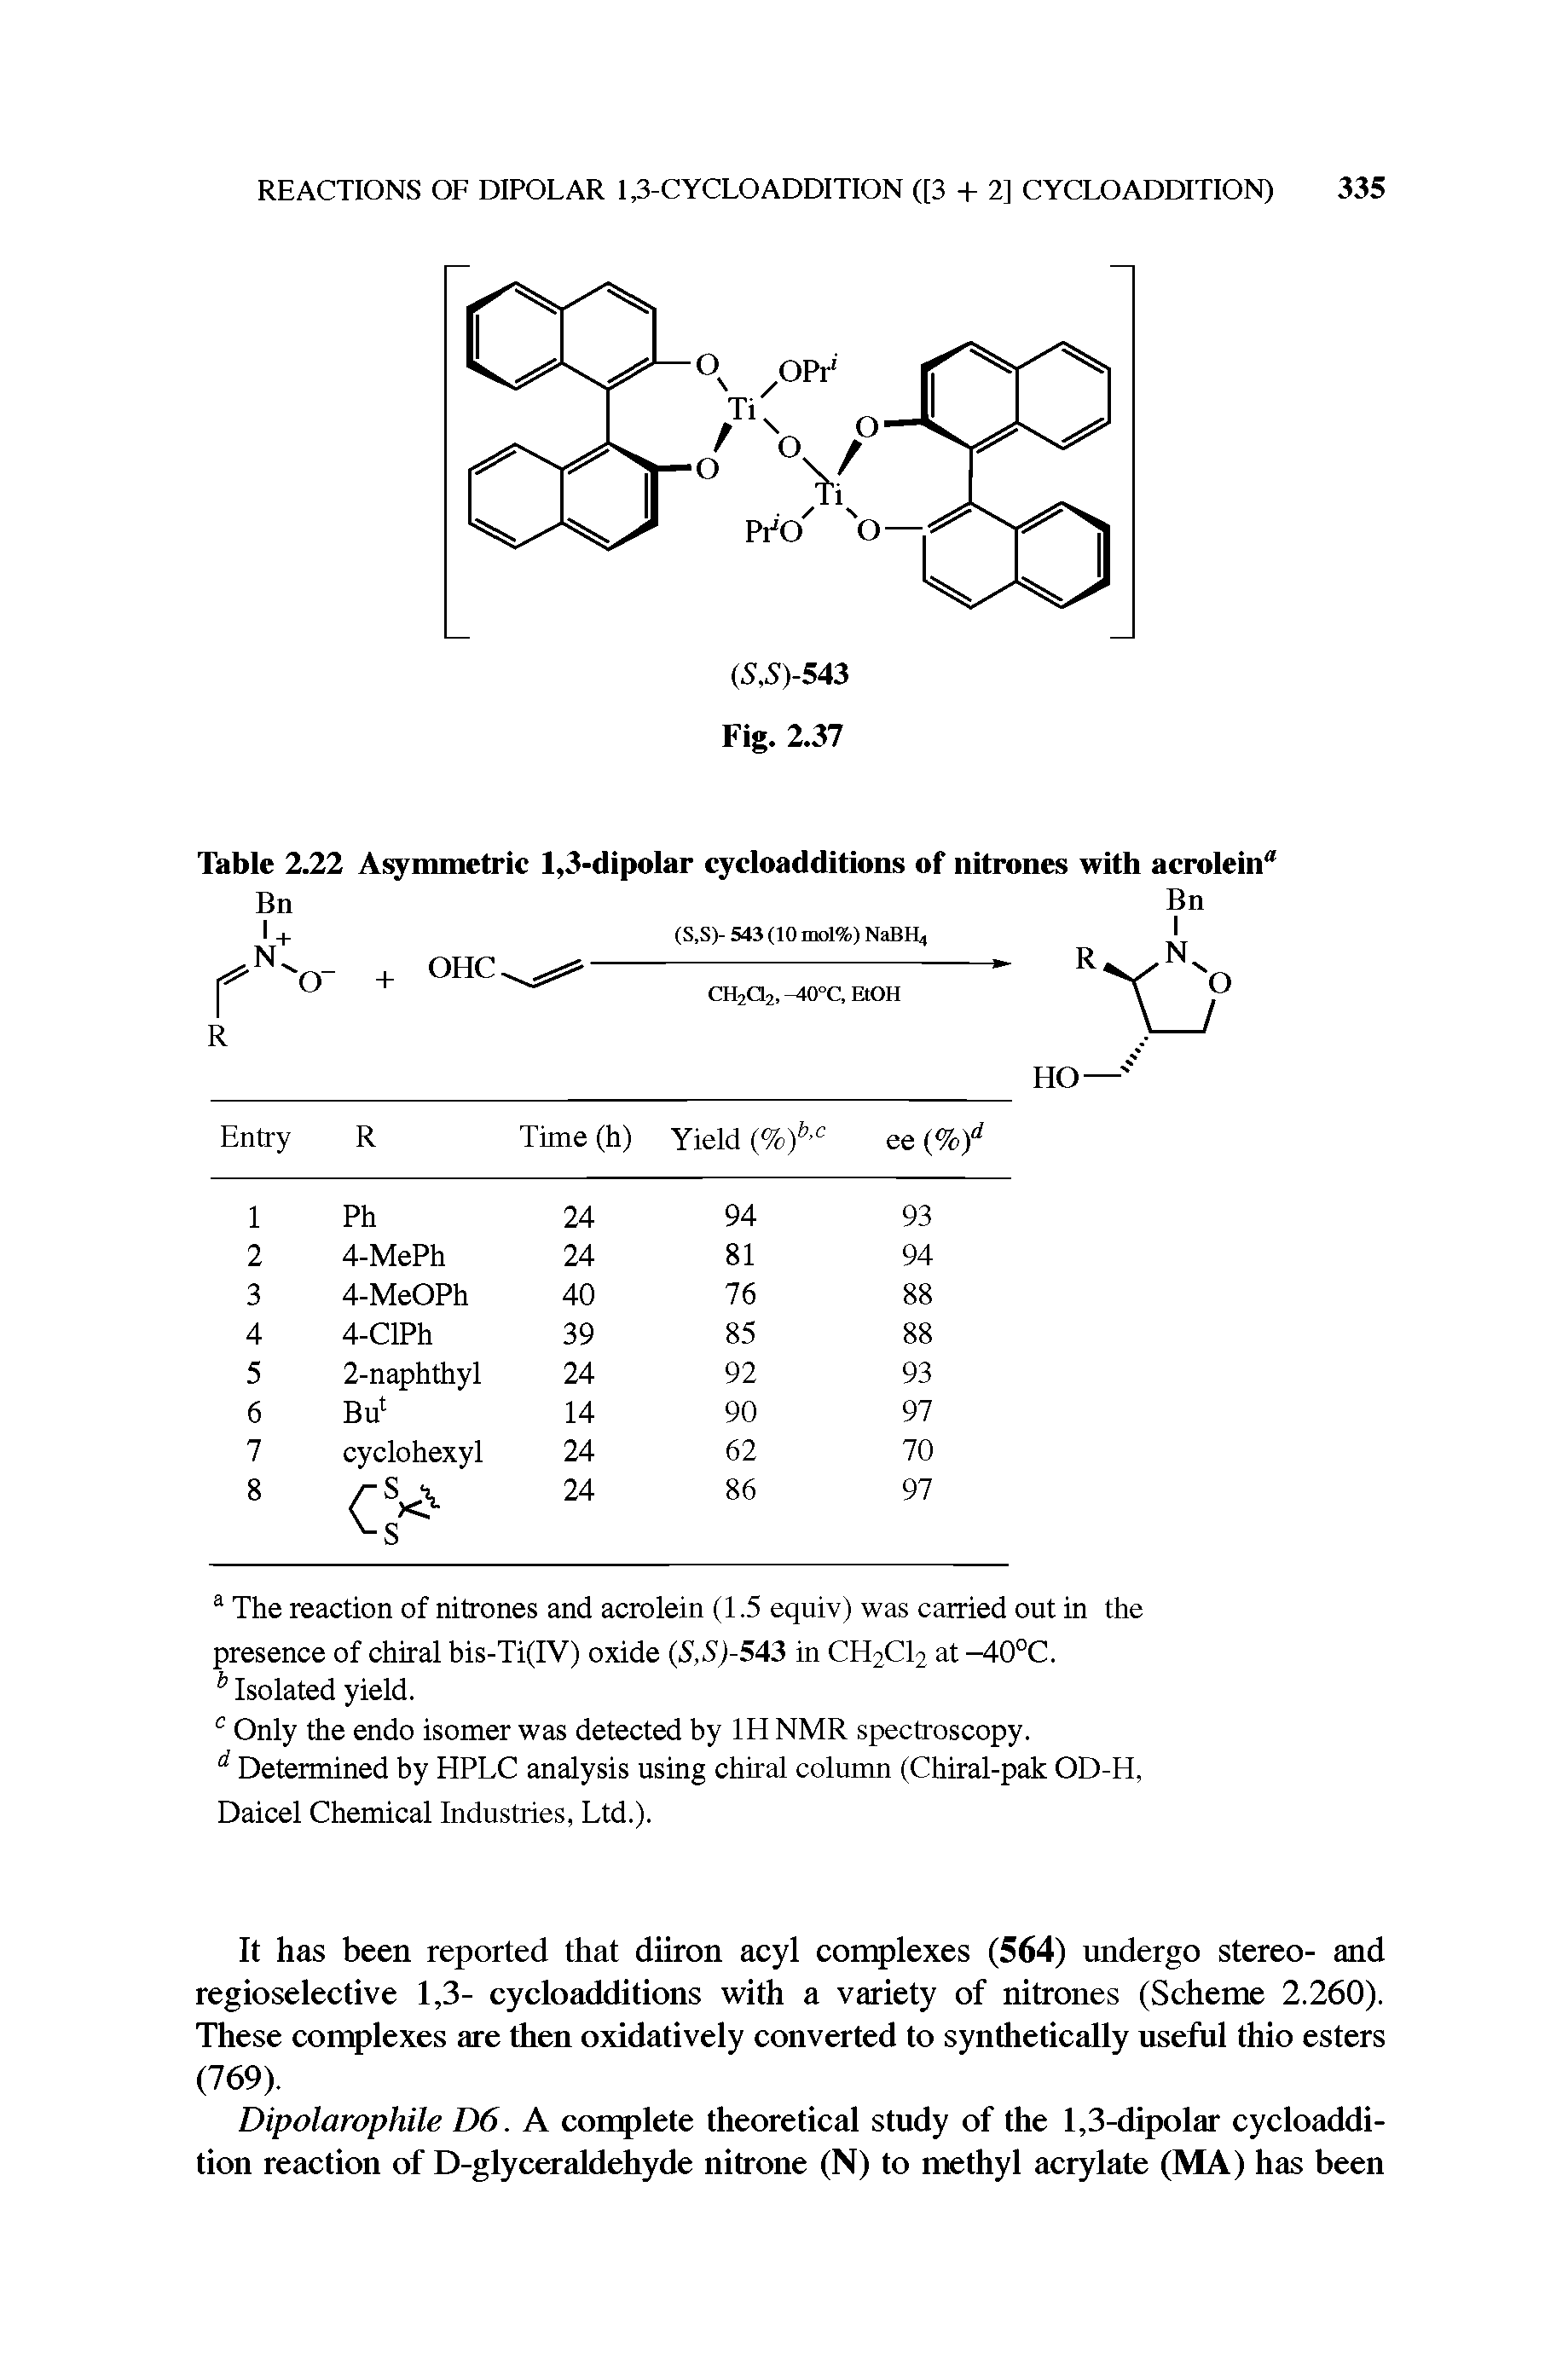 Table 2.22 Asymmetric 1,3-dipolar cycloadditions of nitrones with acrolein"...